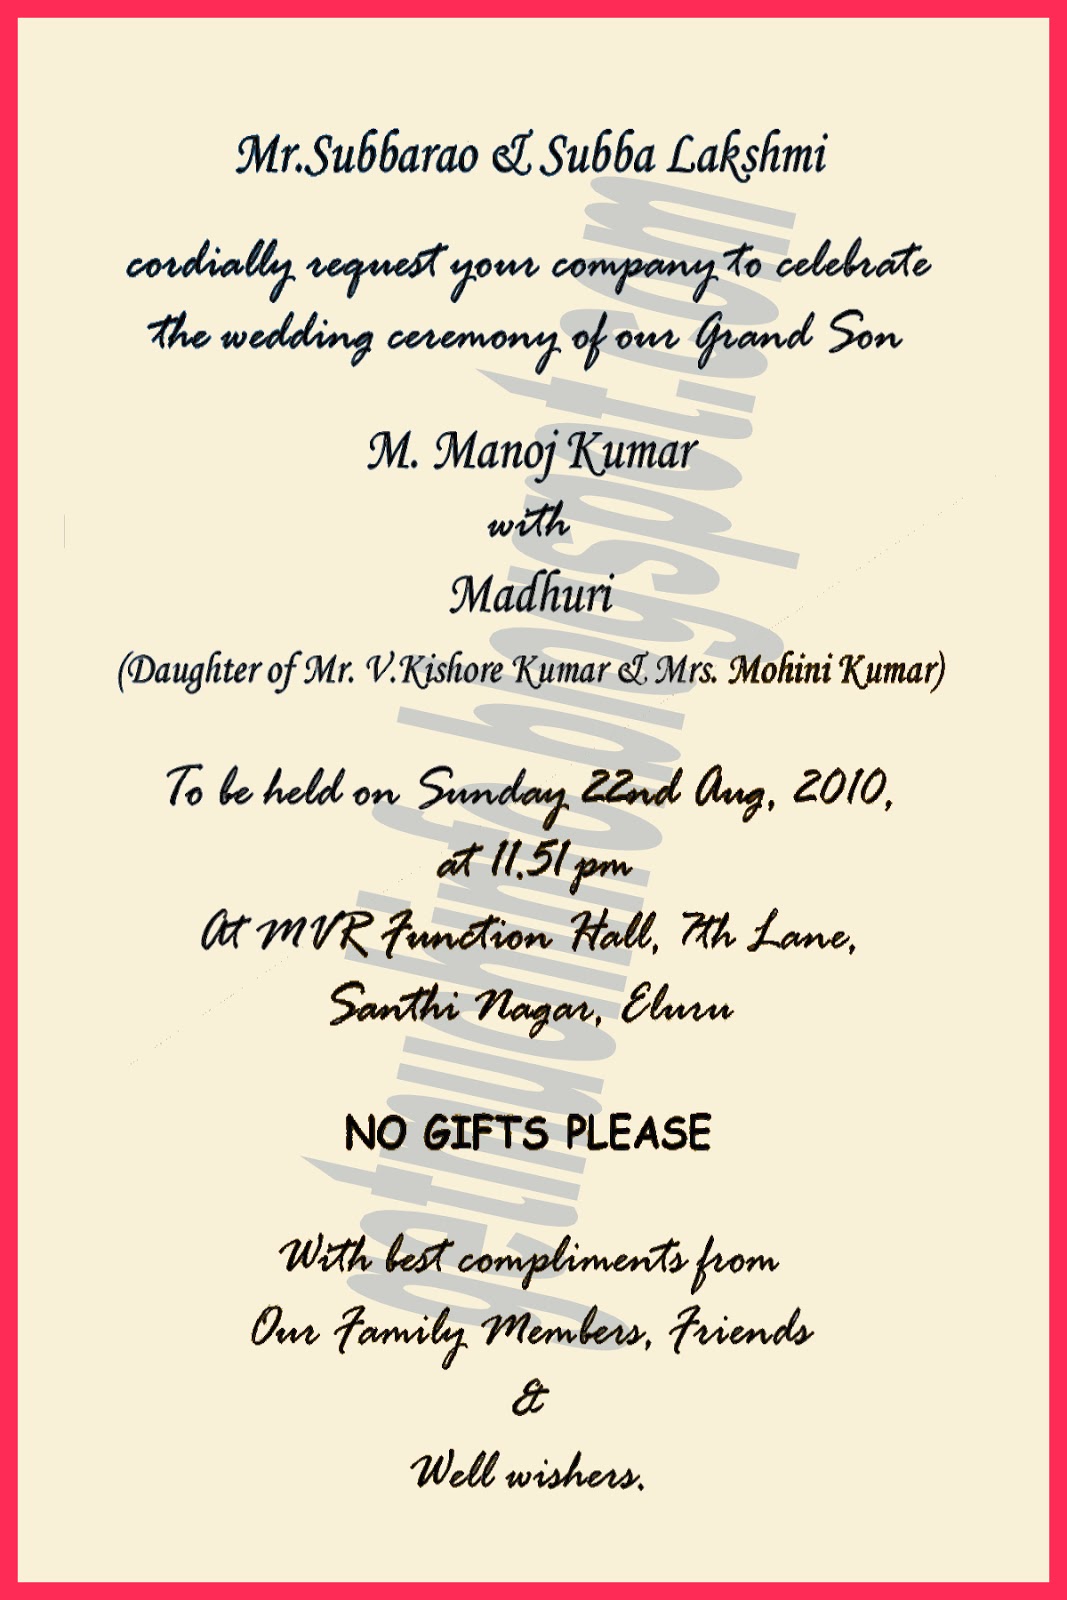 Hindu Wedding Invitation Card In English - Wedding Invitations